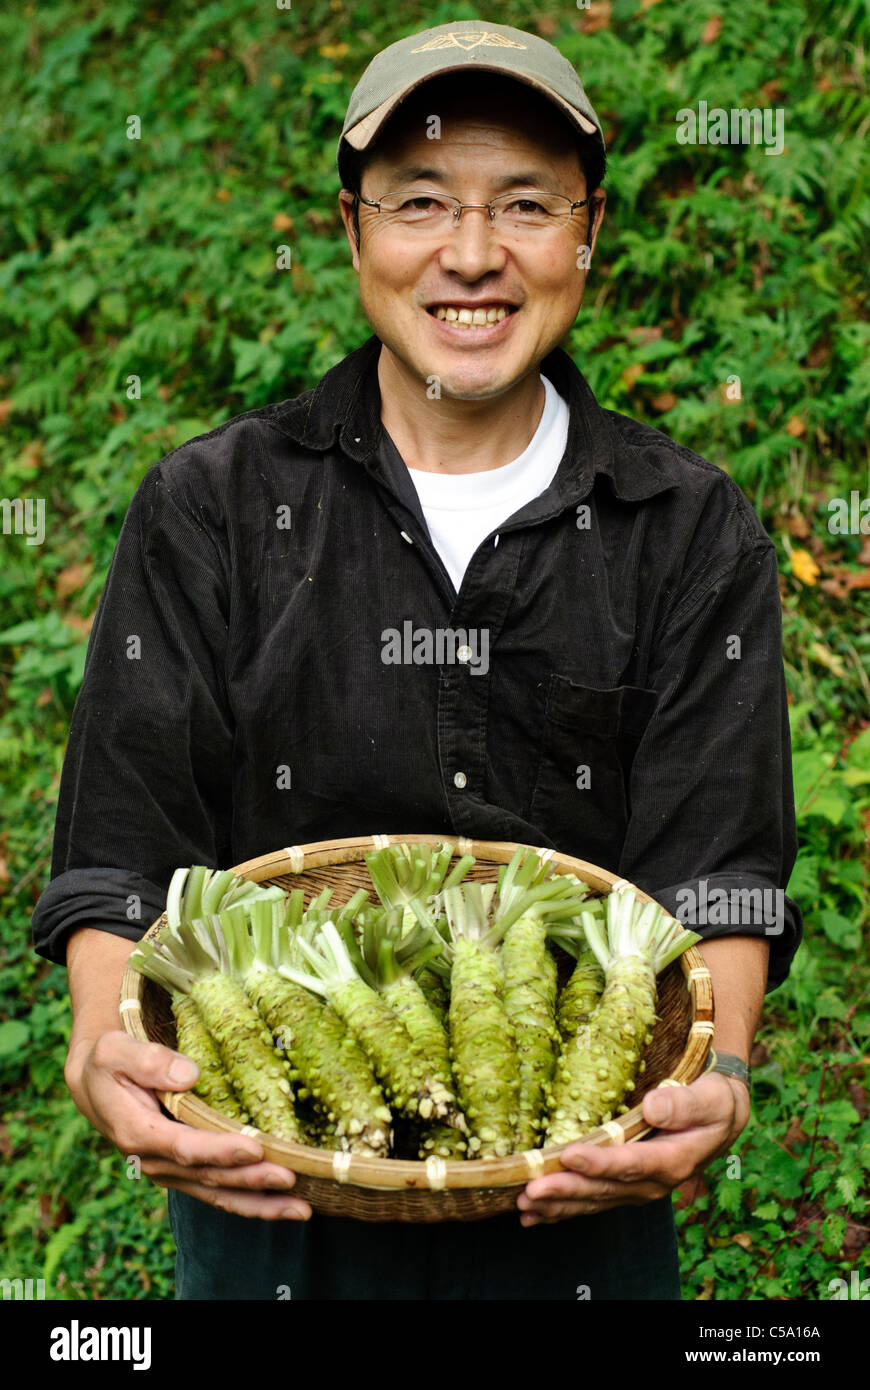 Marutou CHEF Wasabi Iida Tomoya est titulaire d'un panier de wasabi, Shimoda, Japon, le 17 octobre 2010. Banque D'Images